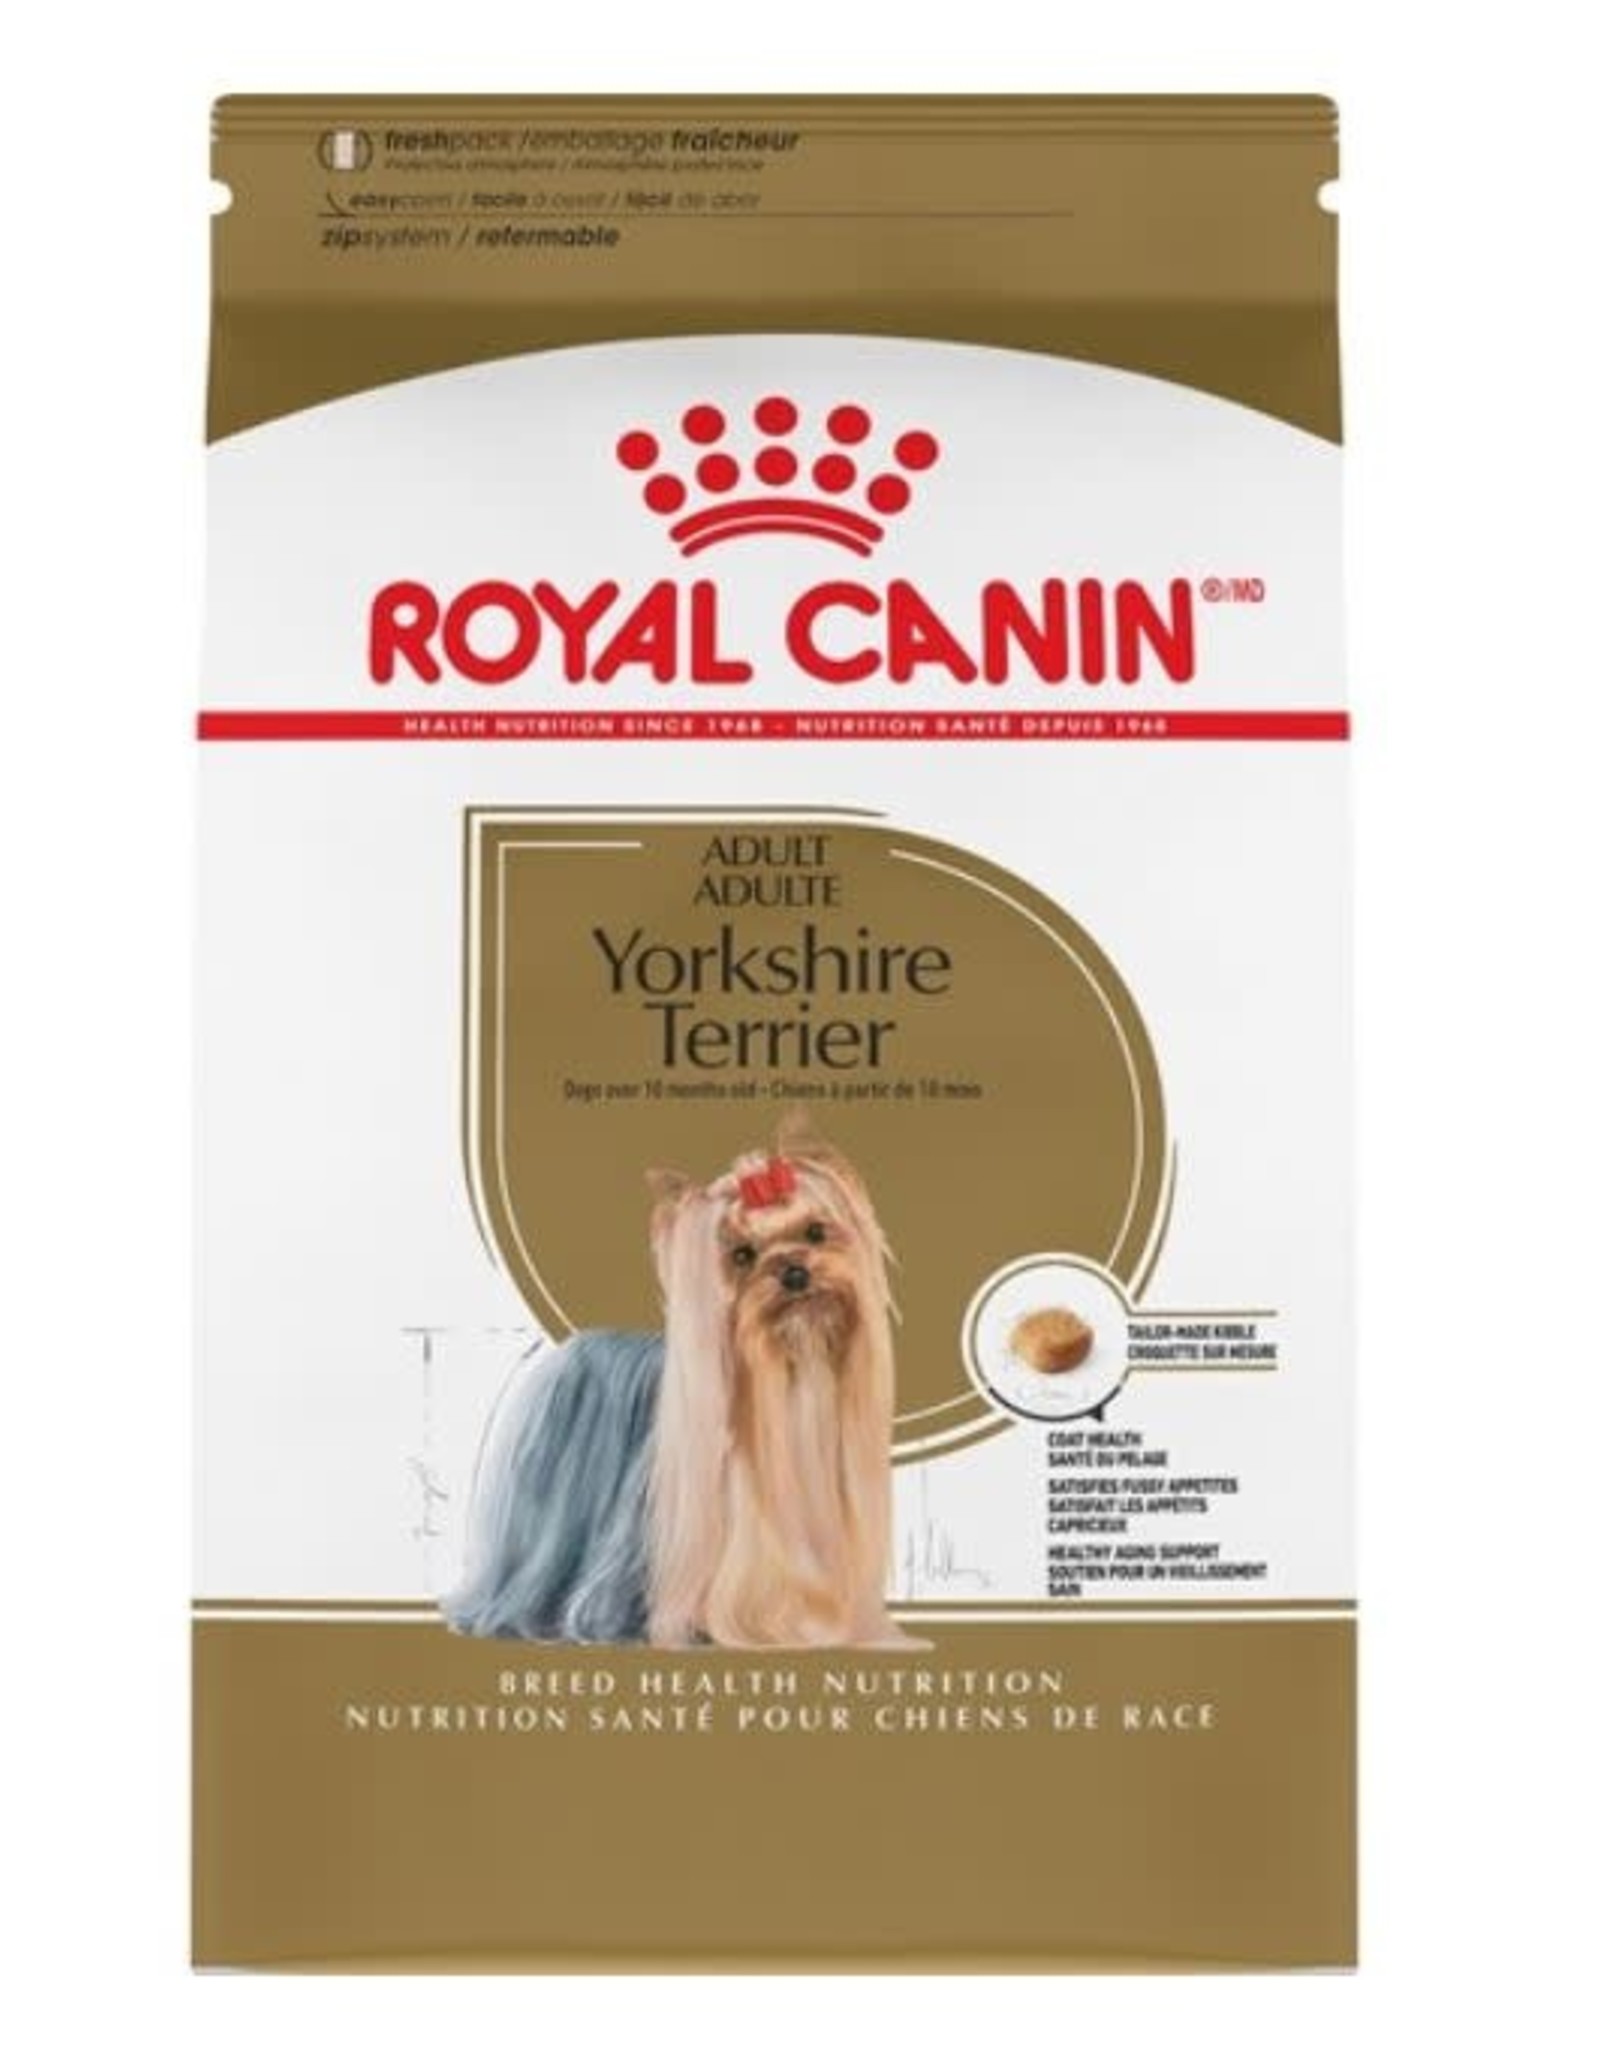 Royal Canin Royal Canin Yorkshire Terrier 2.5 lb